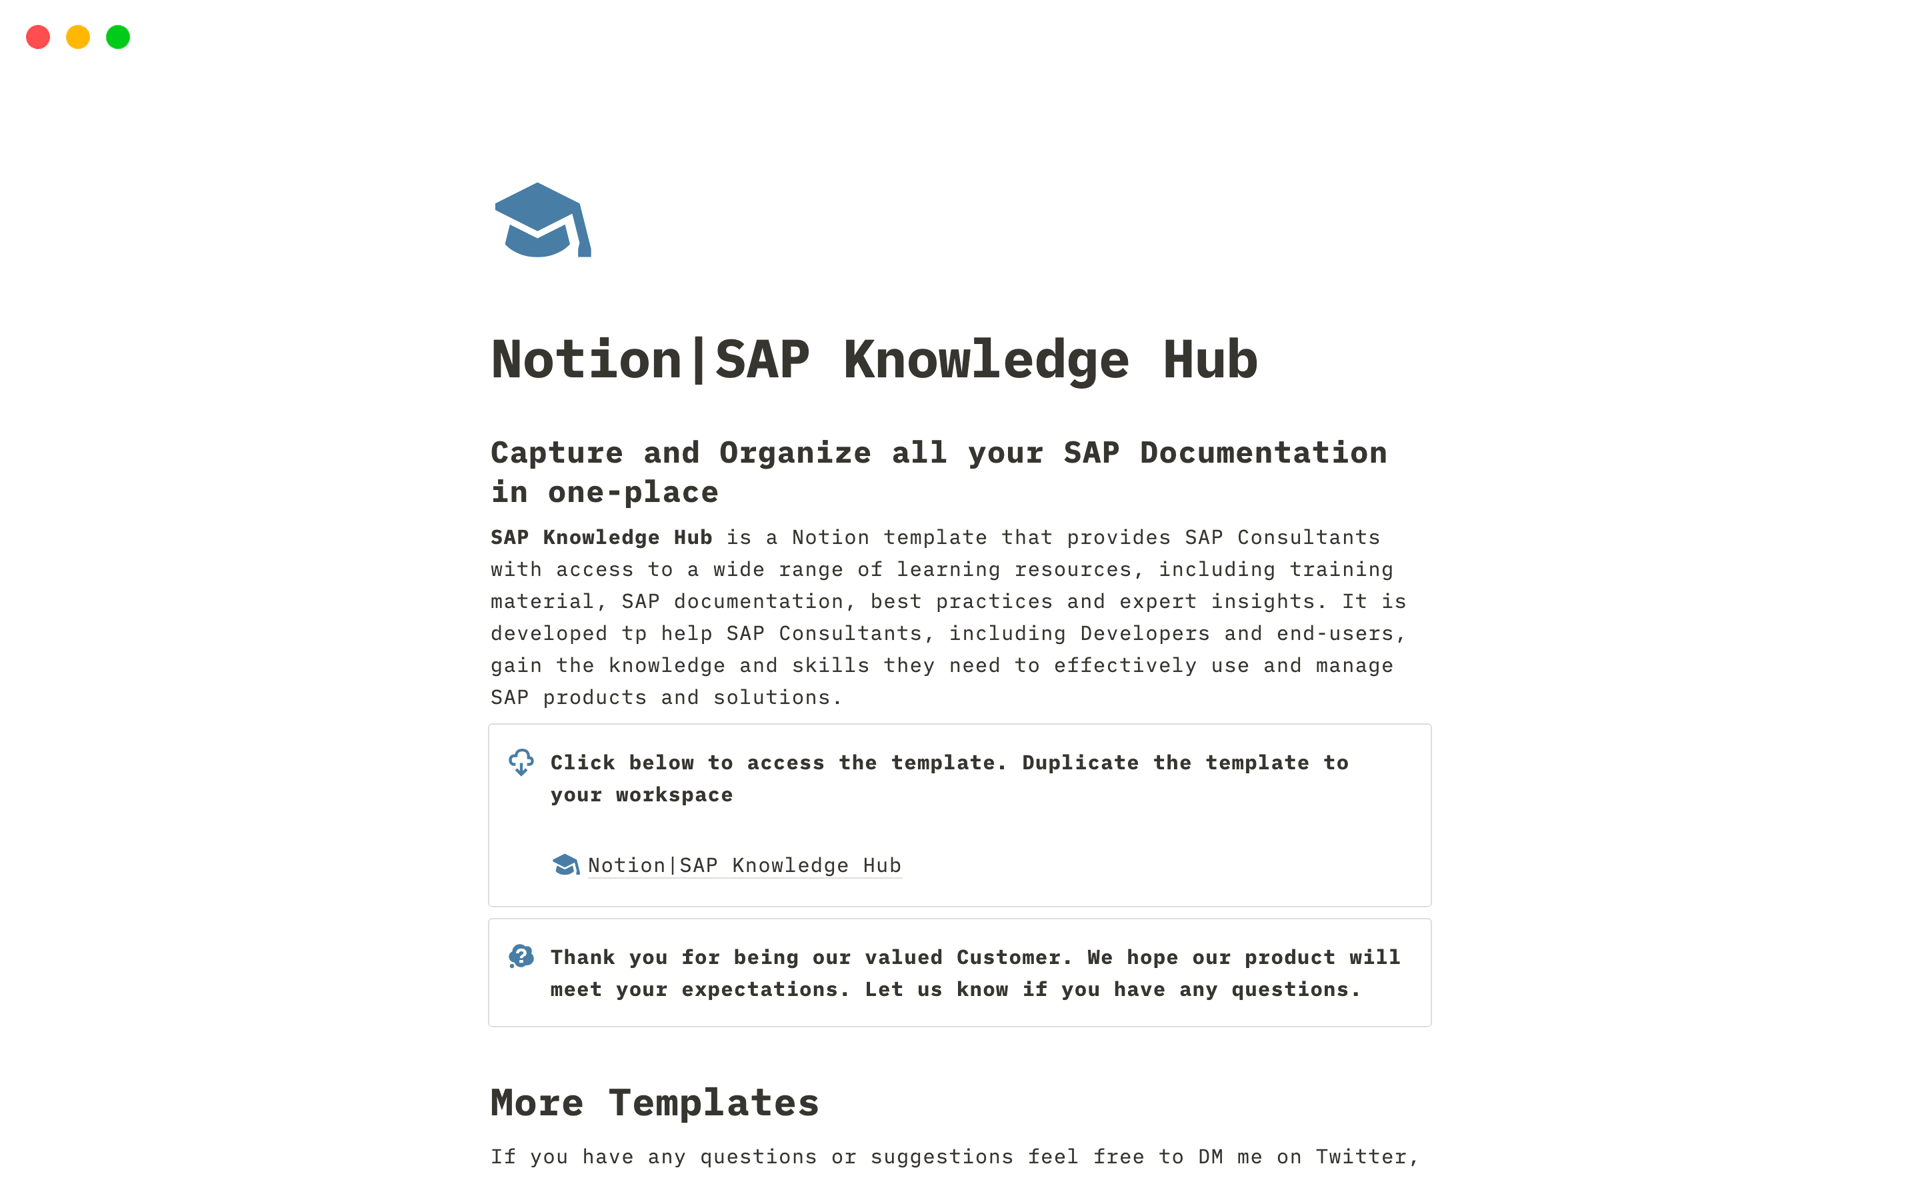 Vista previa de plantilla para SAP Knowledge Hub